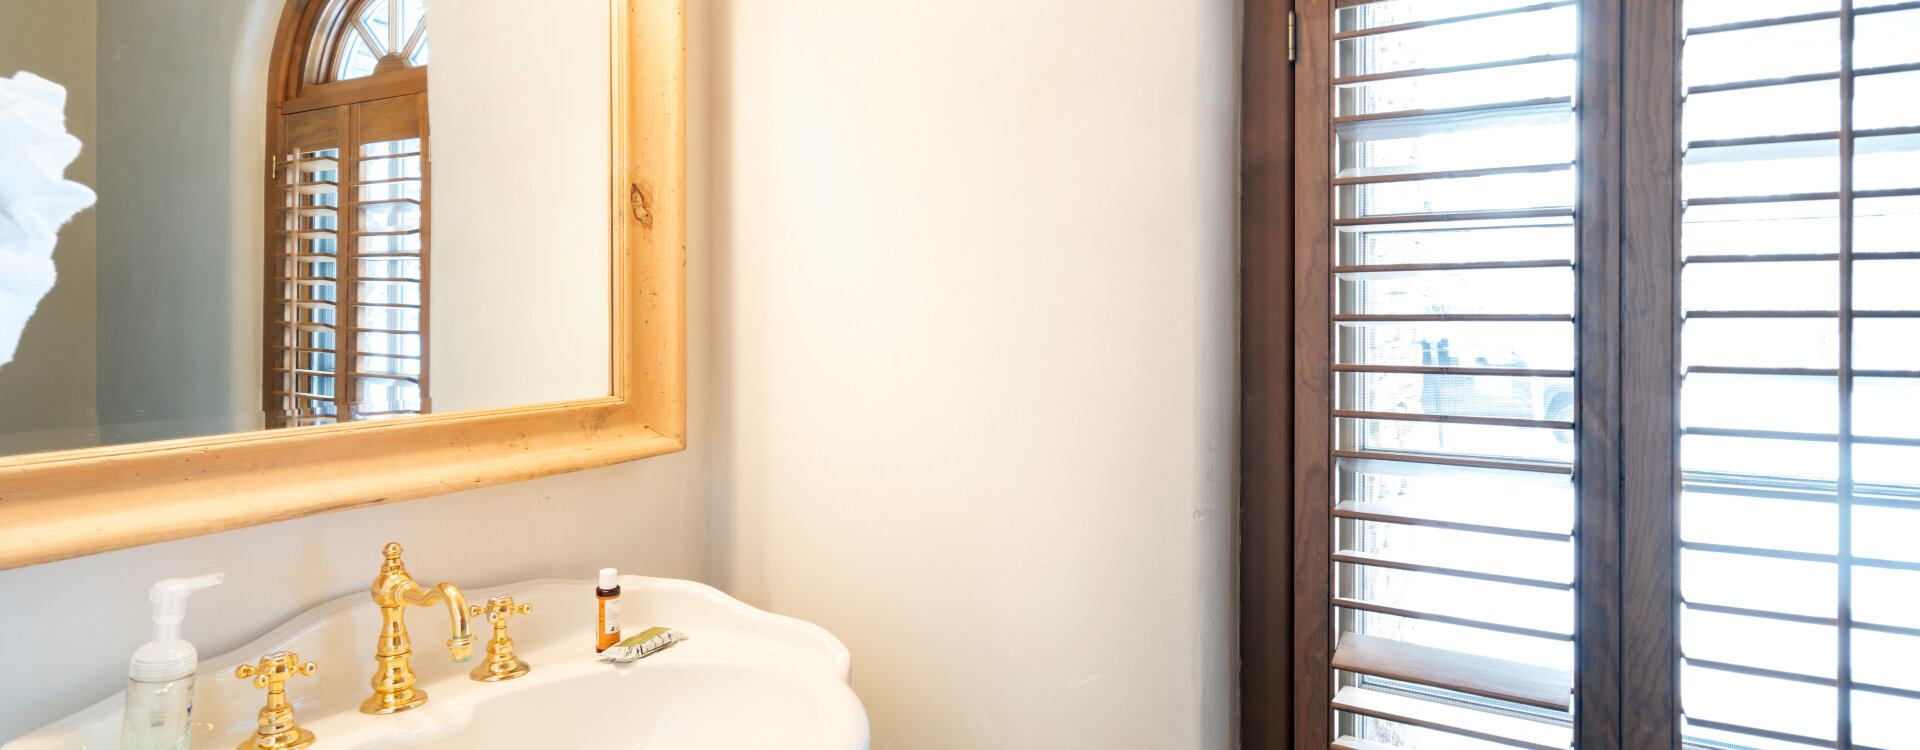 1.14-telluride-founders-retreat-half-bathroom